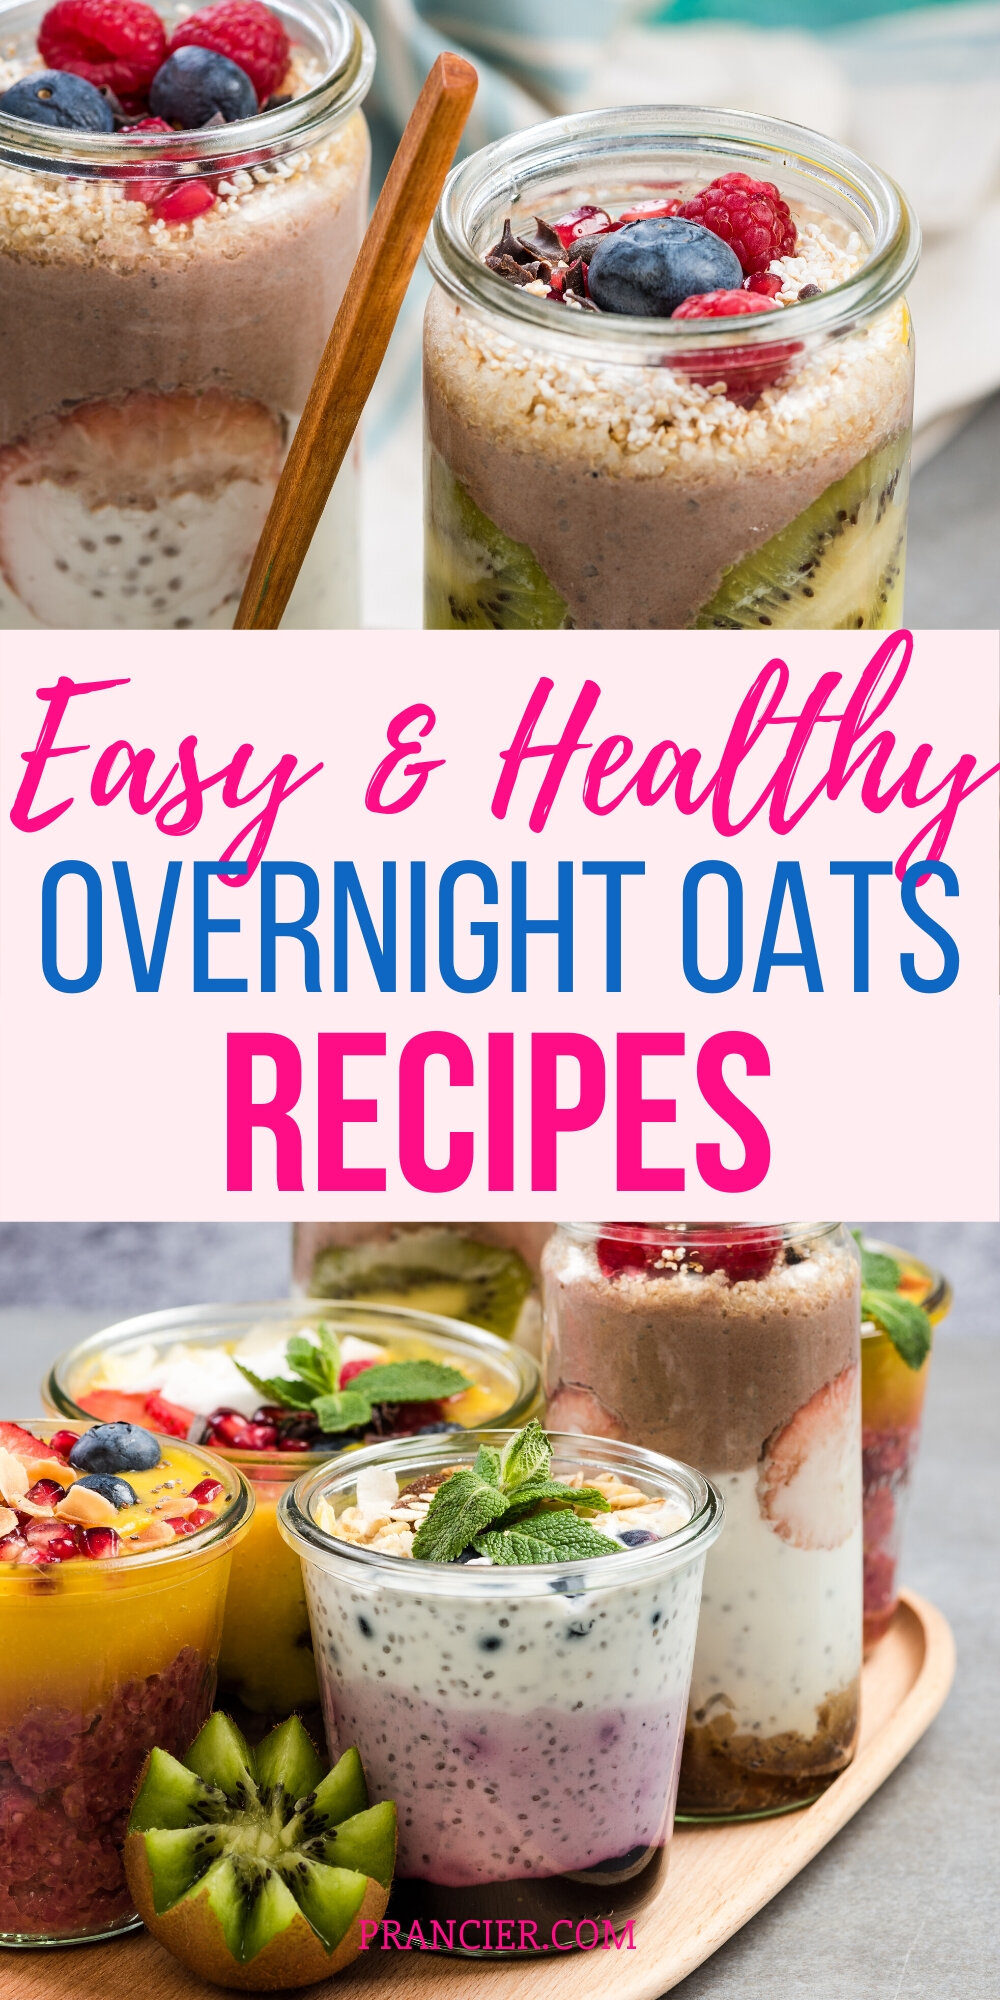 5 Easy and Healthy Overnight Oats Recipes | PRANCIER